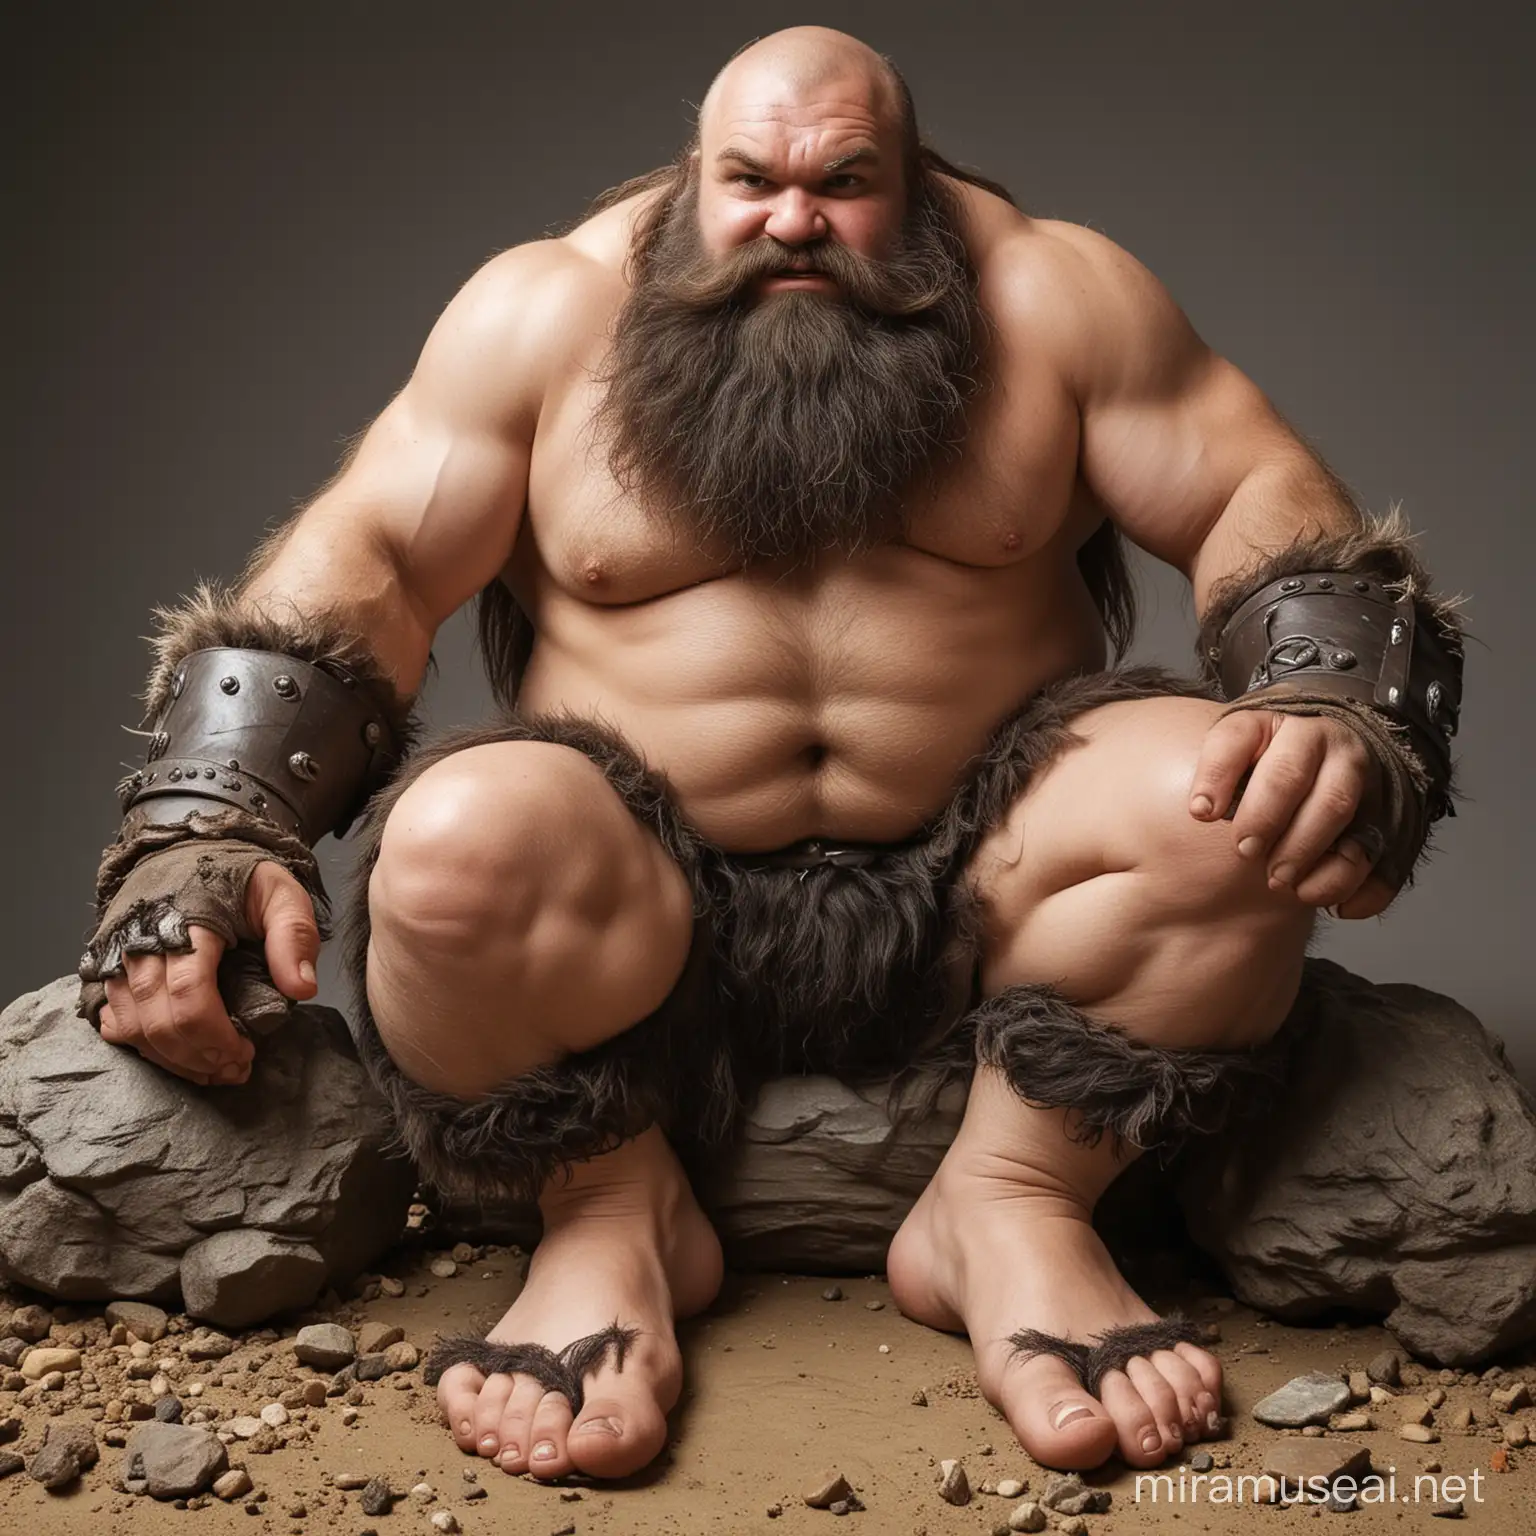 dwarf slayer,barefoot,chubby,primal,dirty feet,giant feet,giant hand,hairy,long beard,
